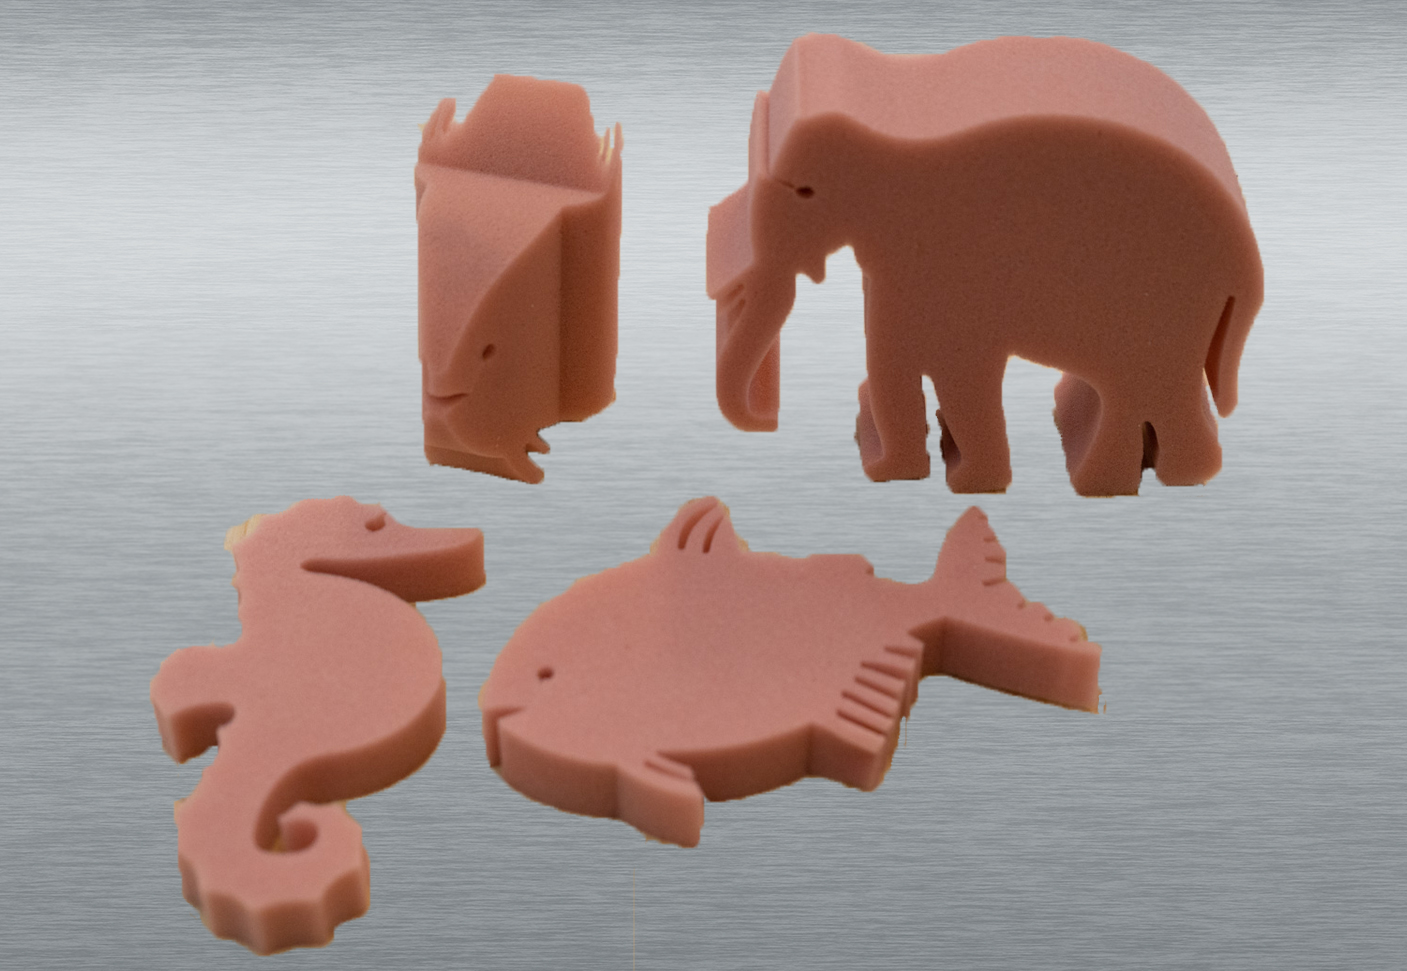 Imagen de figuras de animales hechas de espuma: elefante, caballito de mar, pez